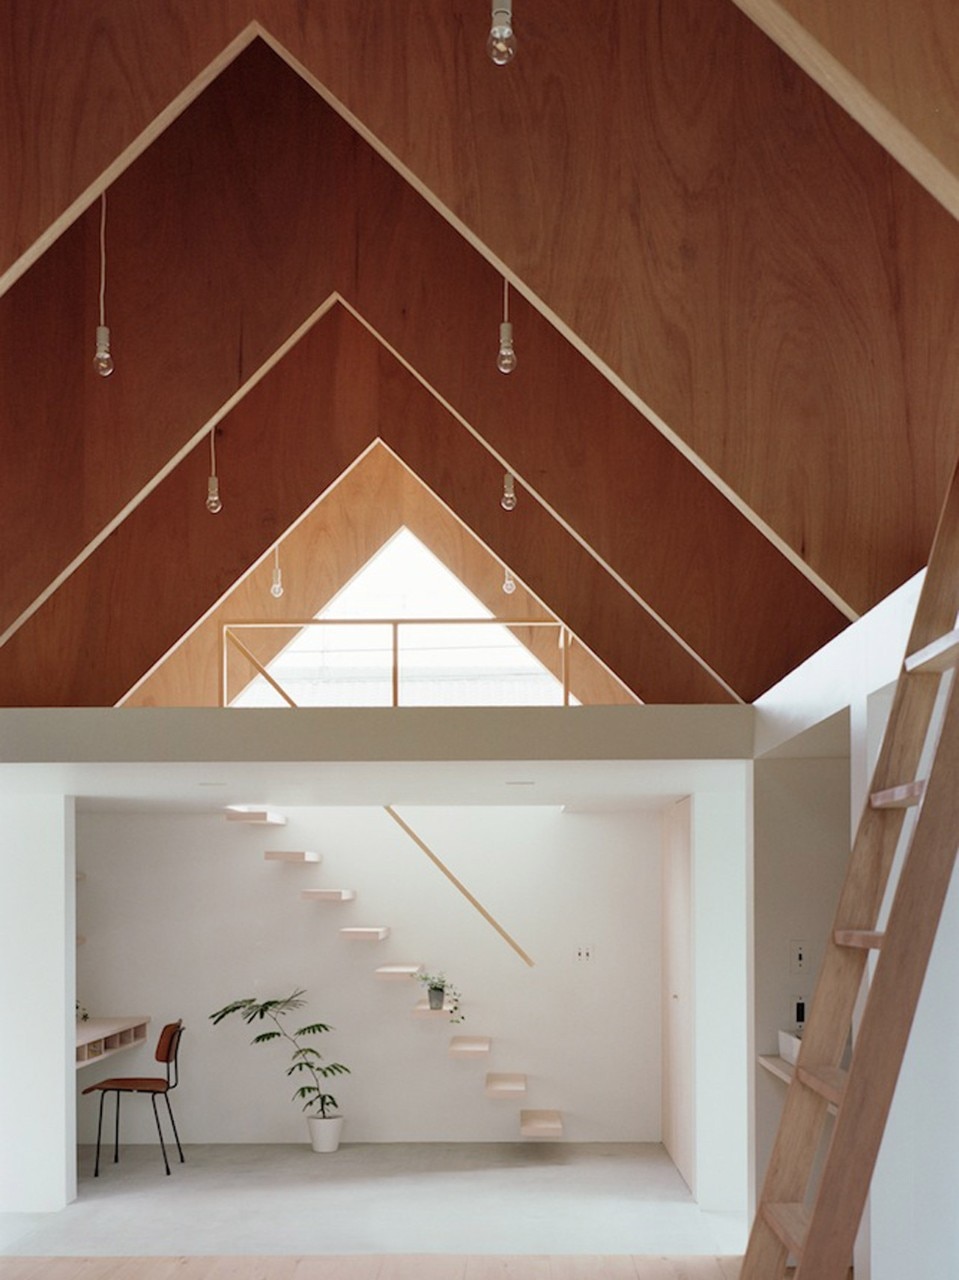 mA-style architects: Koya no Sumika